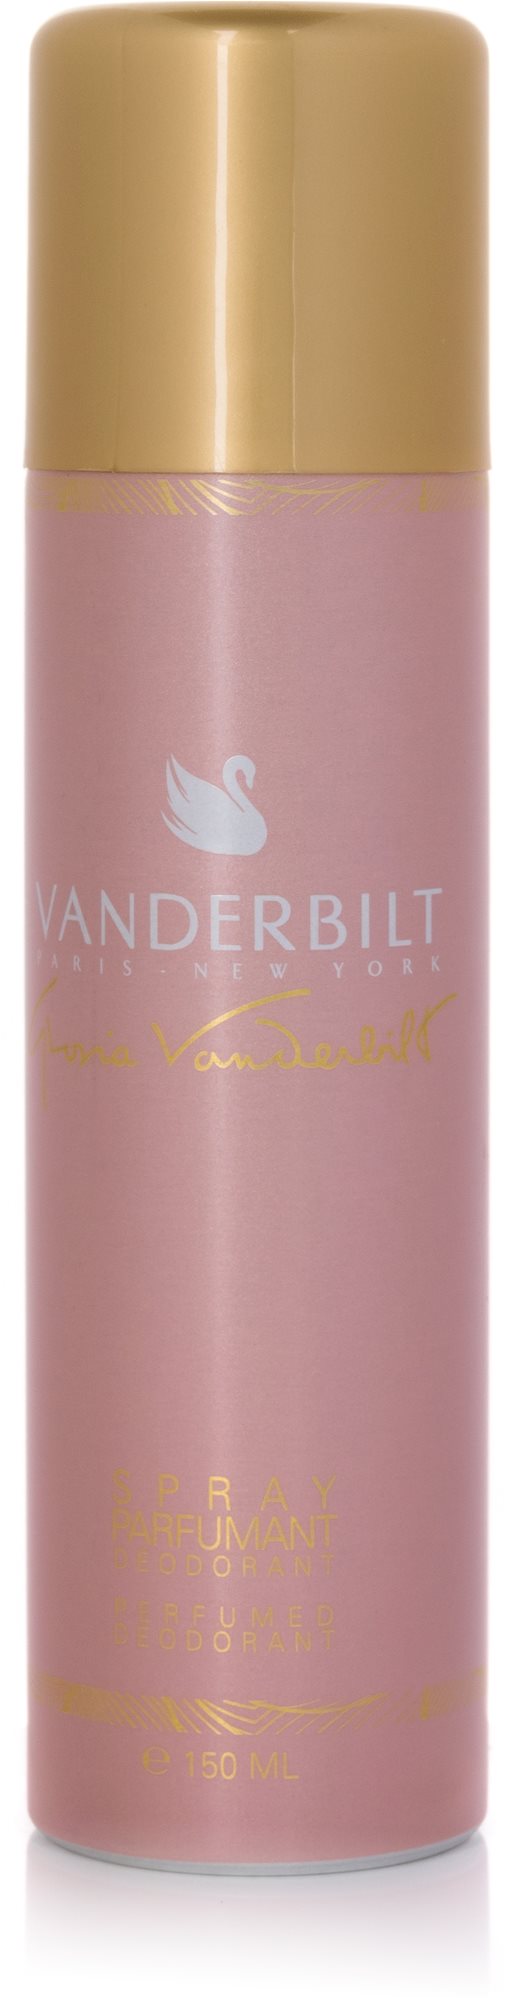 Dezodor GLORIA VANDERBILT Vanderbilt Deodorant 150 ml